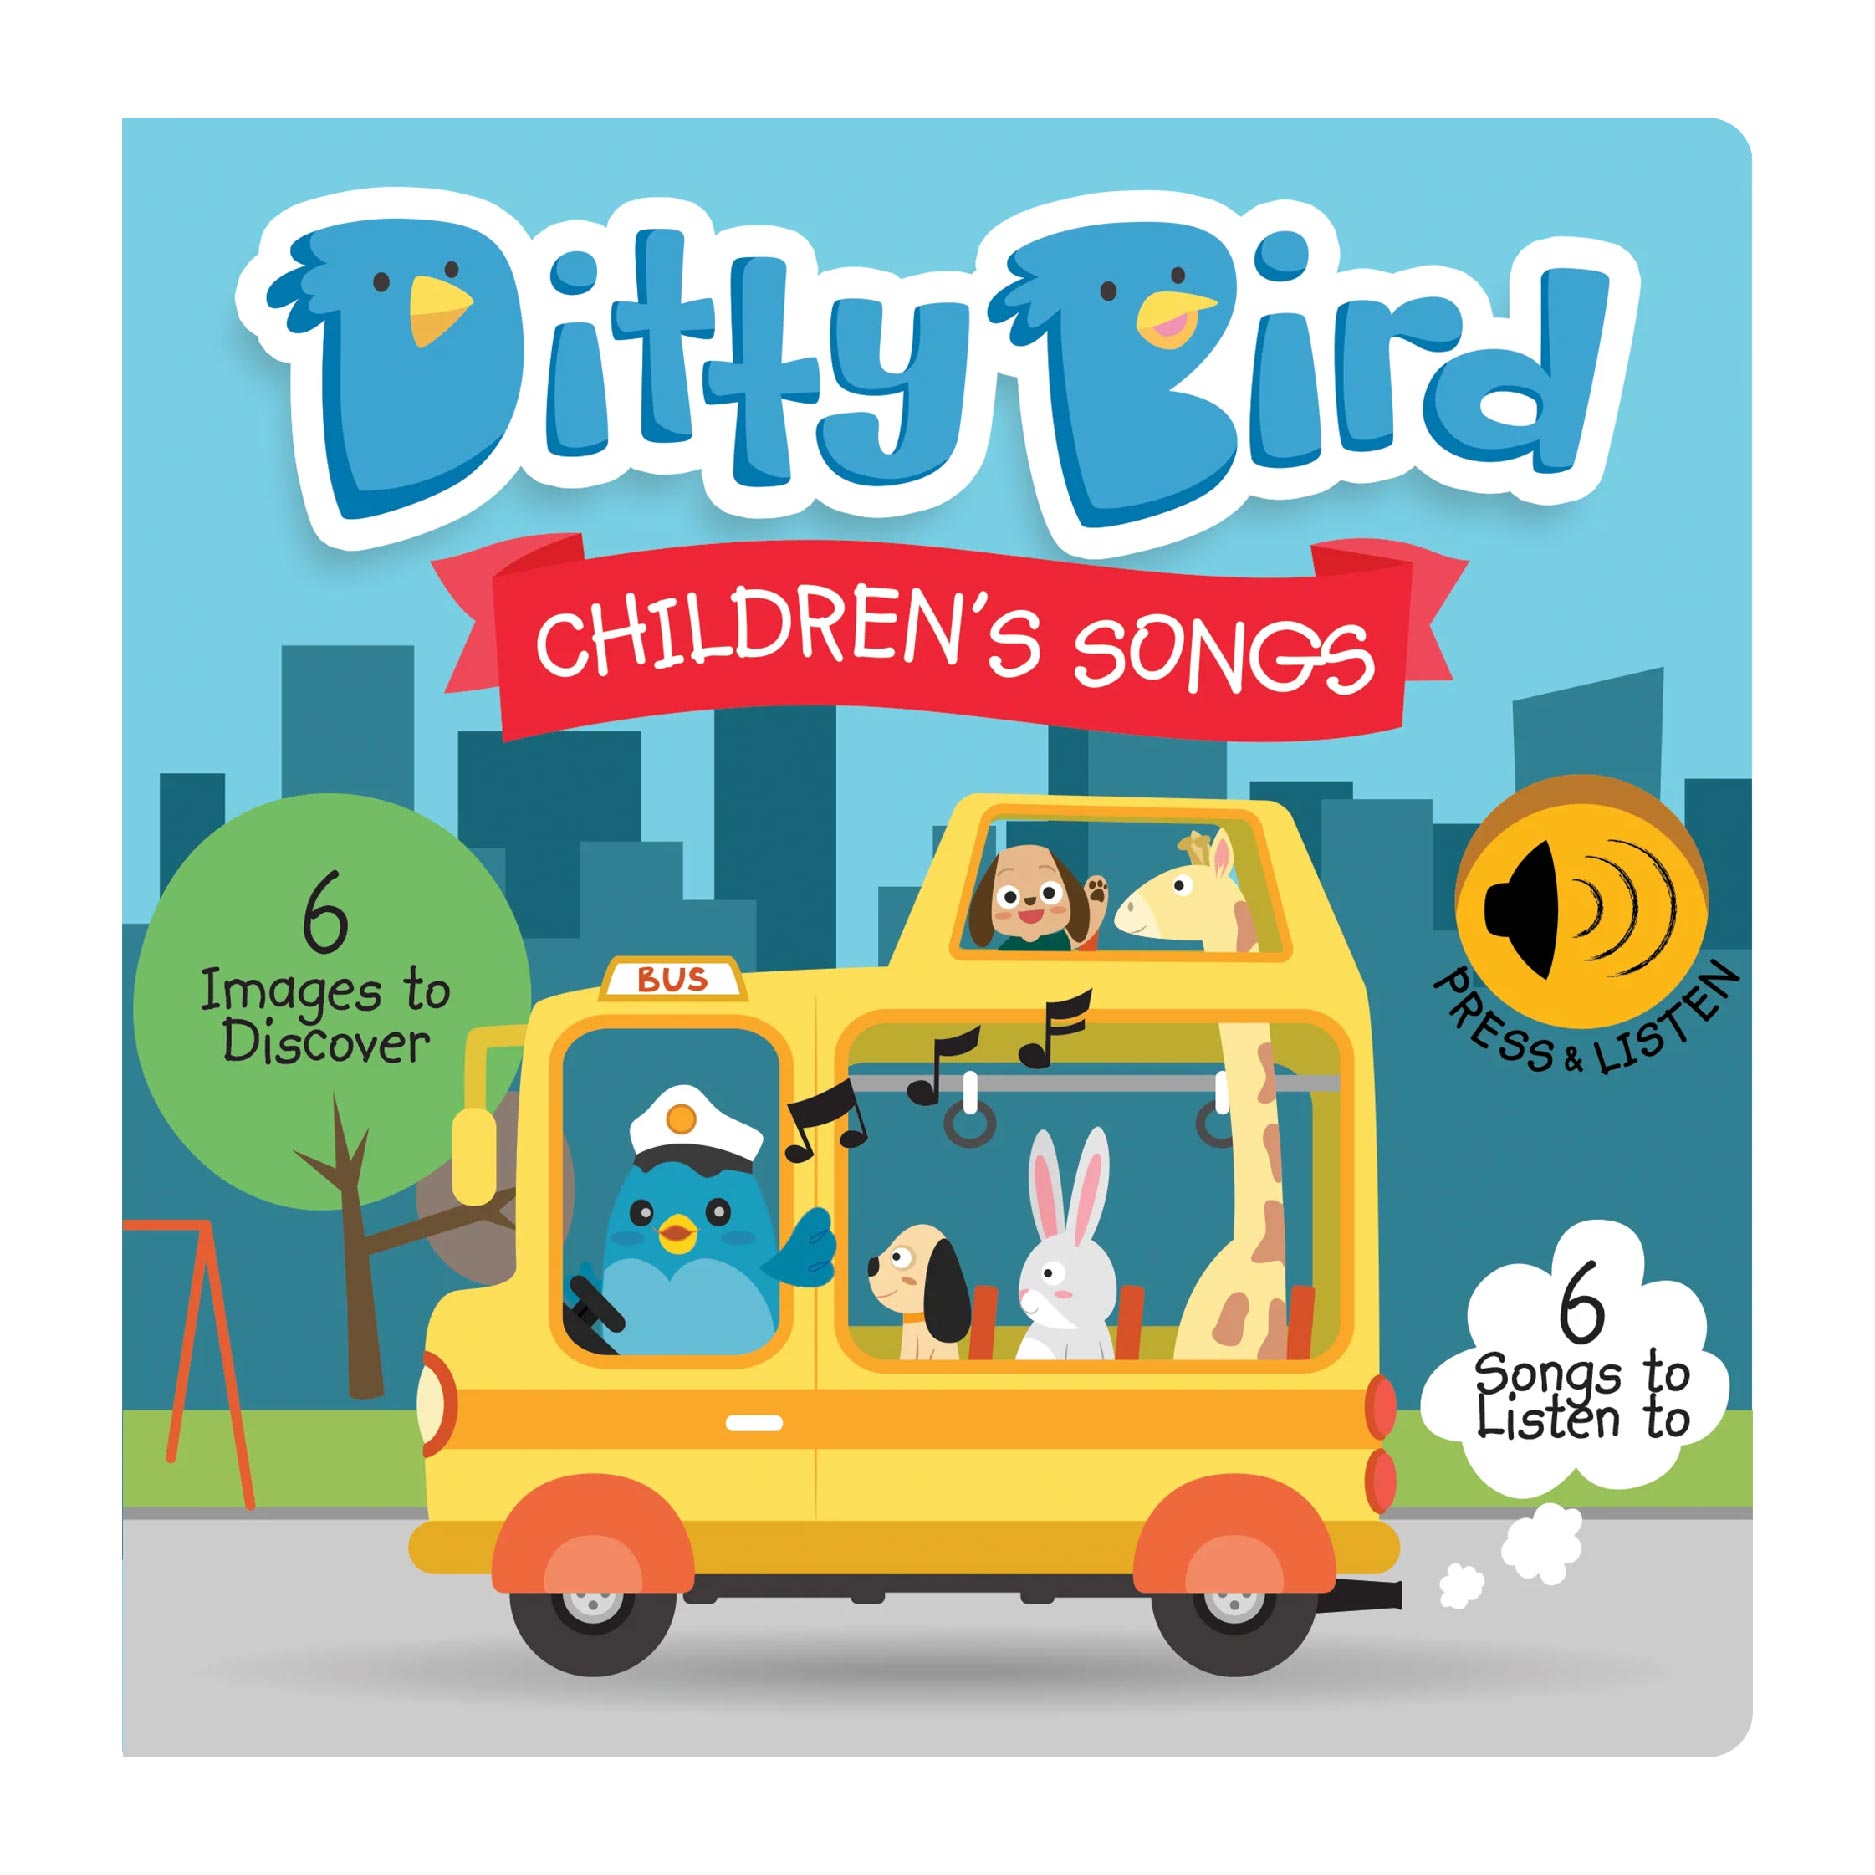 Ditty Bird Children's Songs - Bestseller